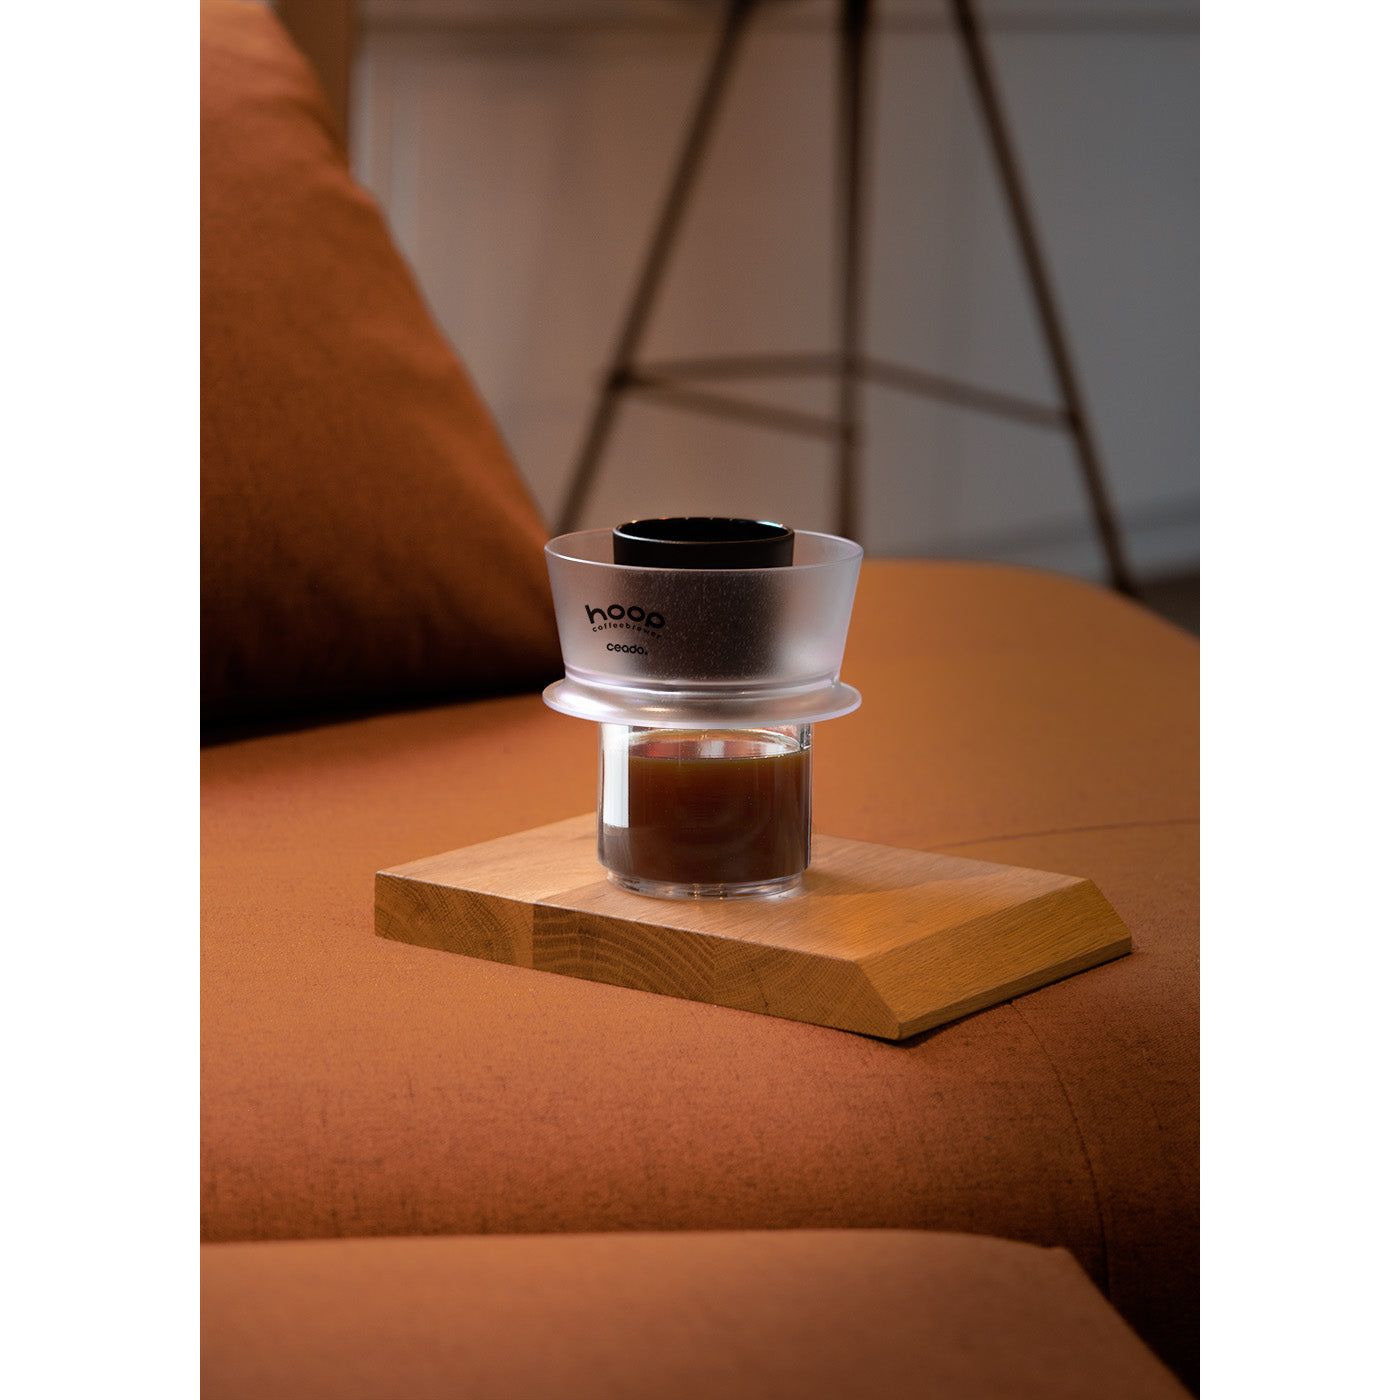 CEADO Hoop - Handfilter - NEUHEIT - Best New Product Award Handdilter Ceado    - Rheinland.Coffee